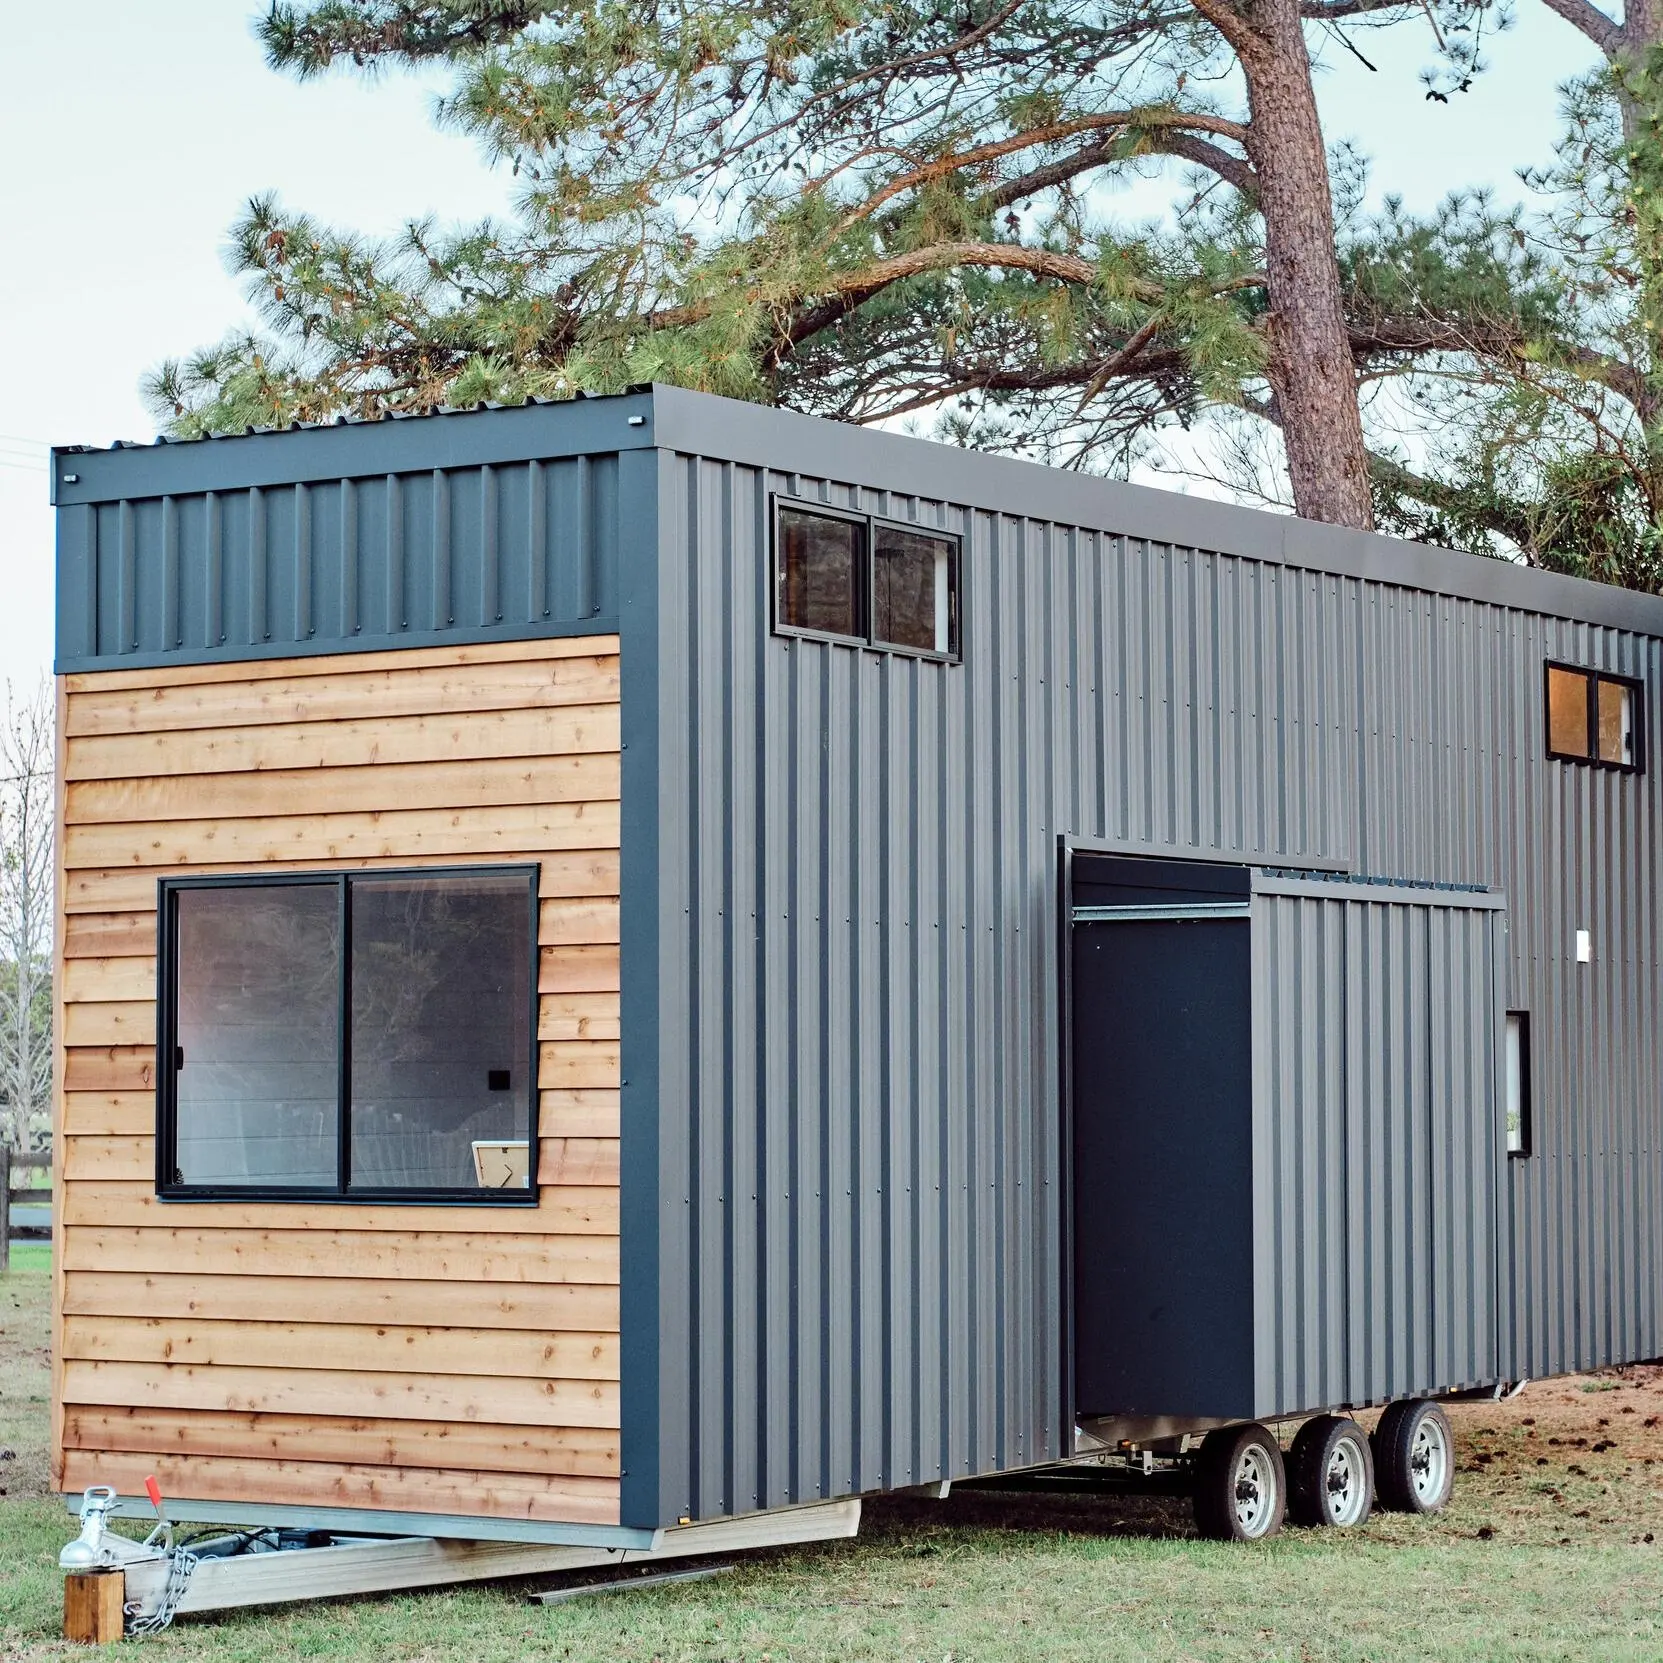 Xingang Tiny House On Wheels modern Prefab house small prefabricated trailer house